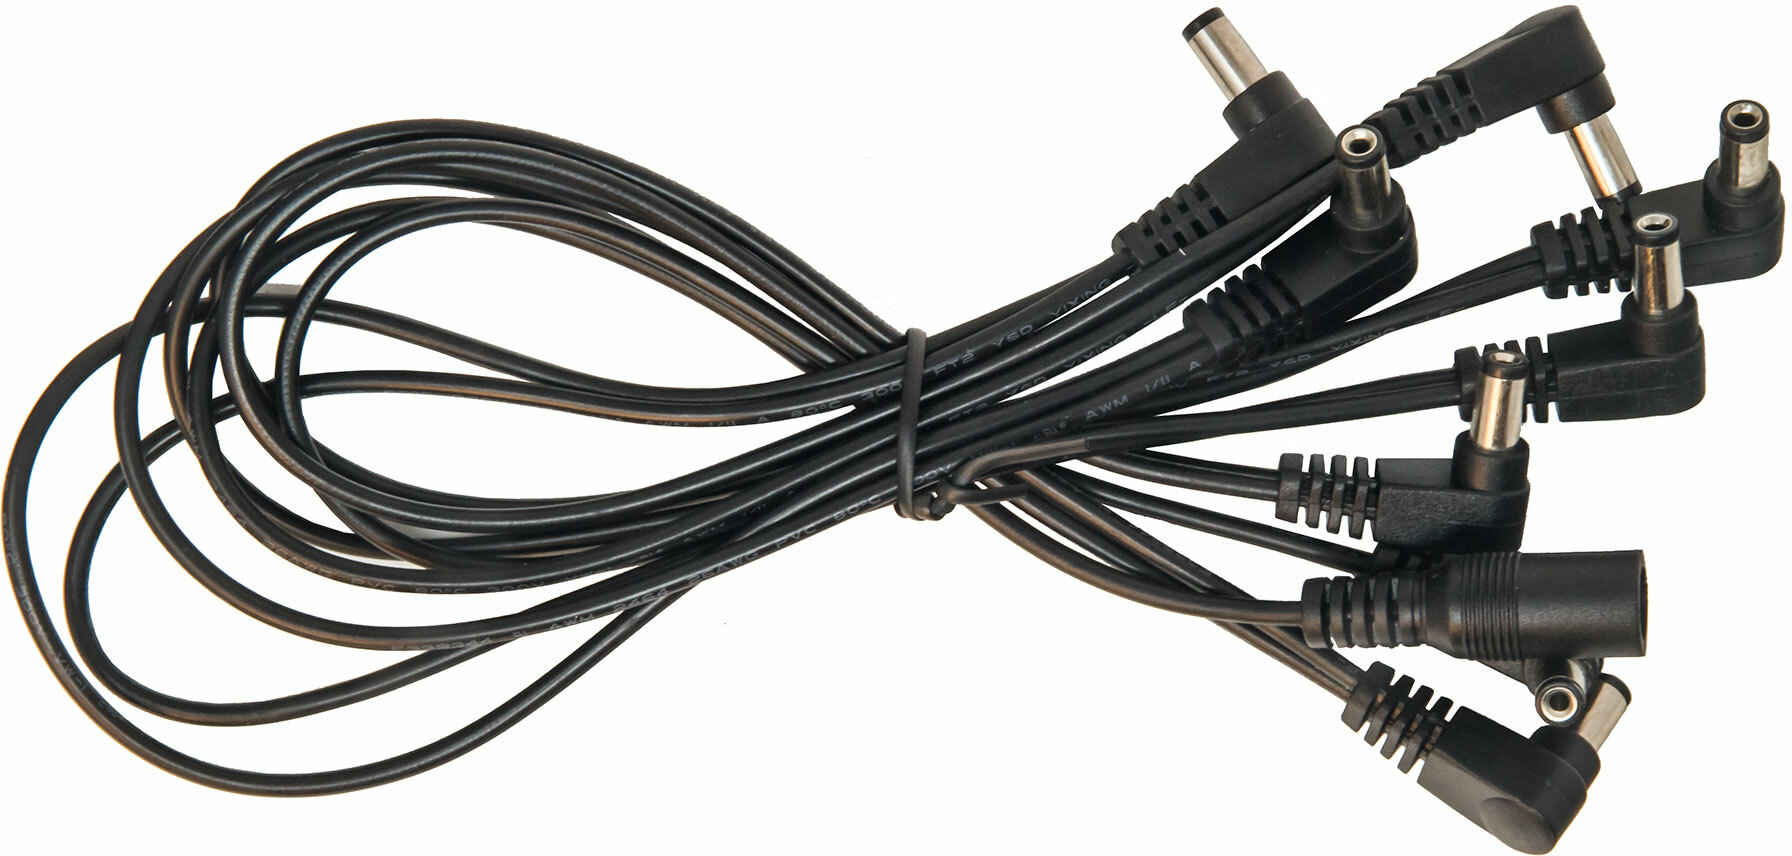 X-tone 8-way Chain Cable Alimentation Pedales - Adaptador de conexión - Main picture